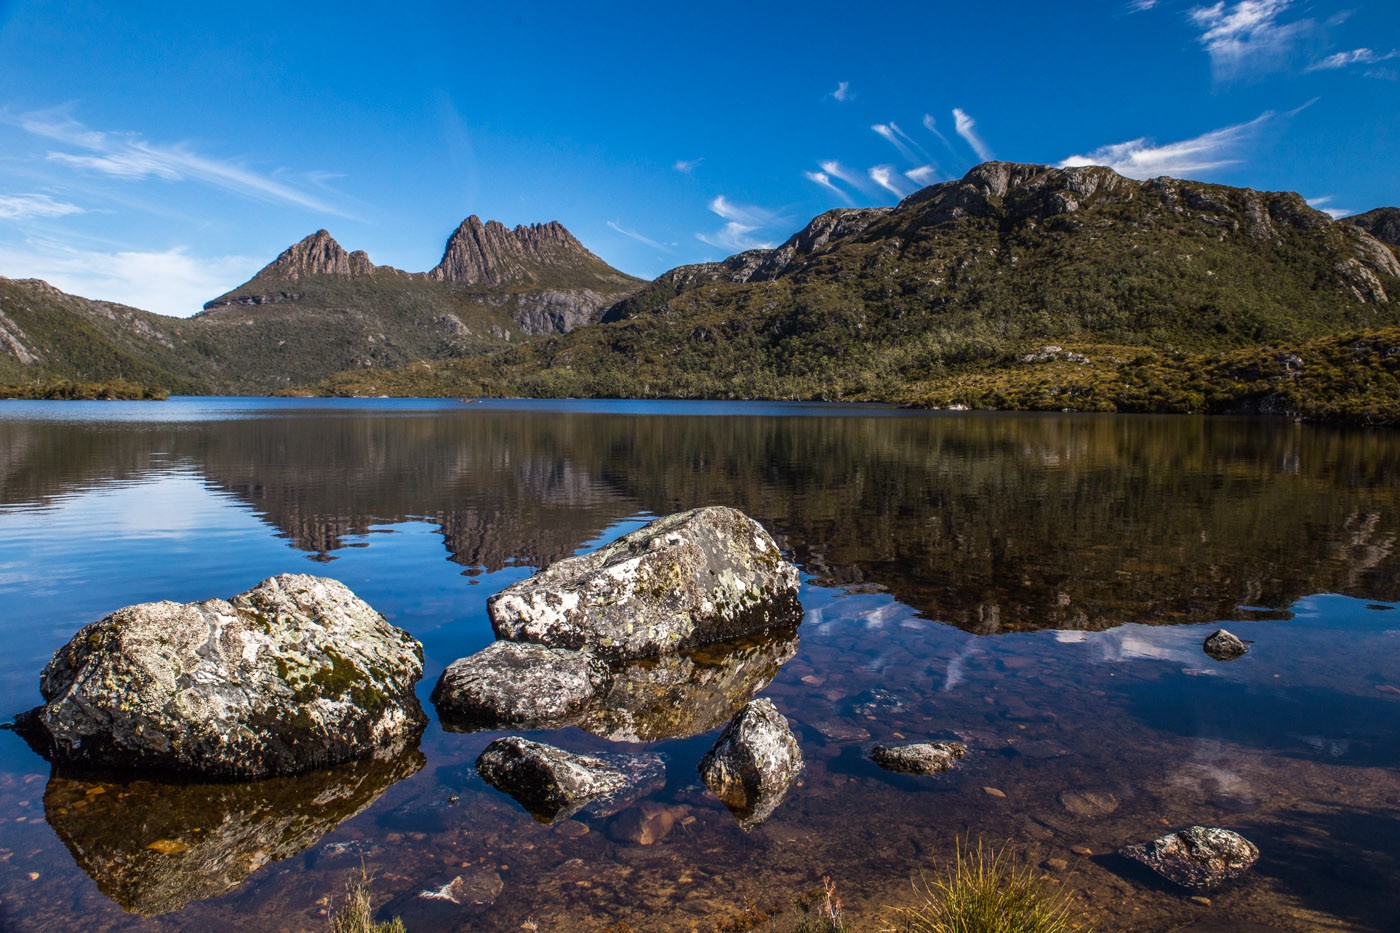 28 Photos That Will Make You Want to Visit Tasmania